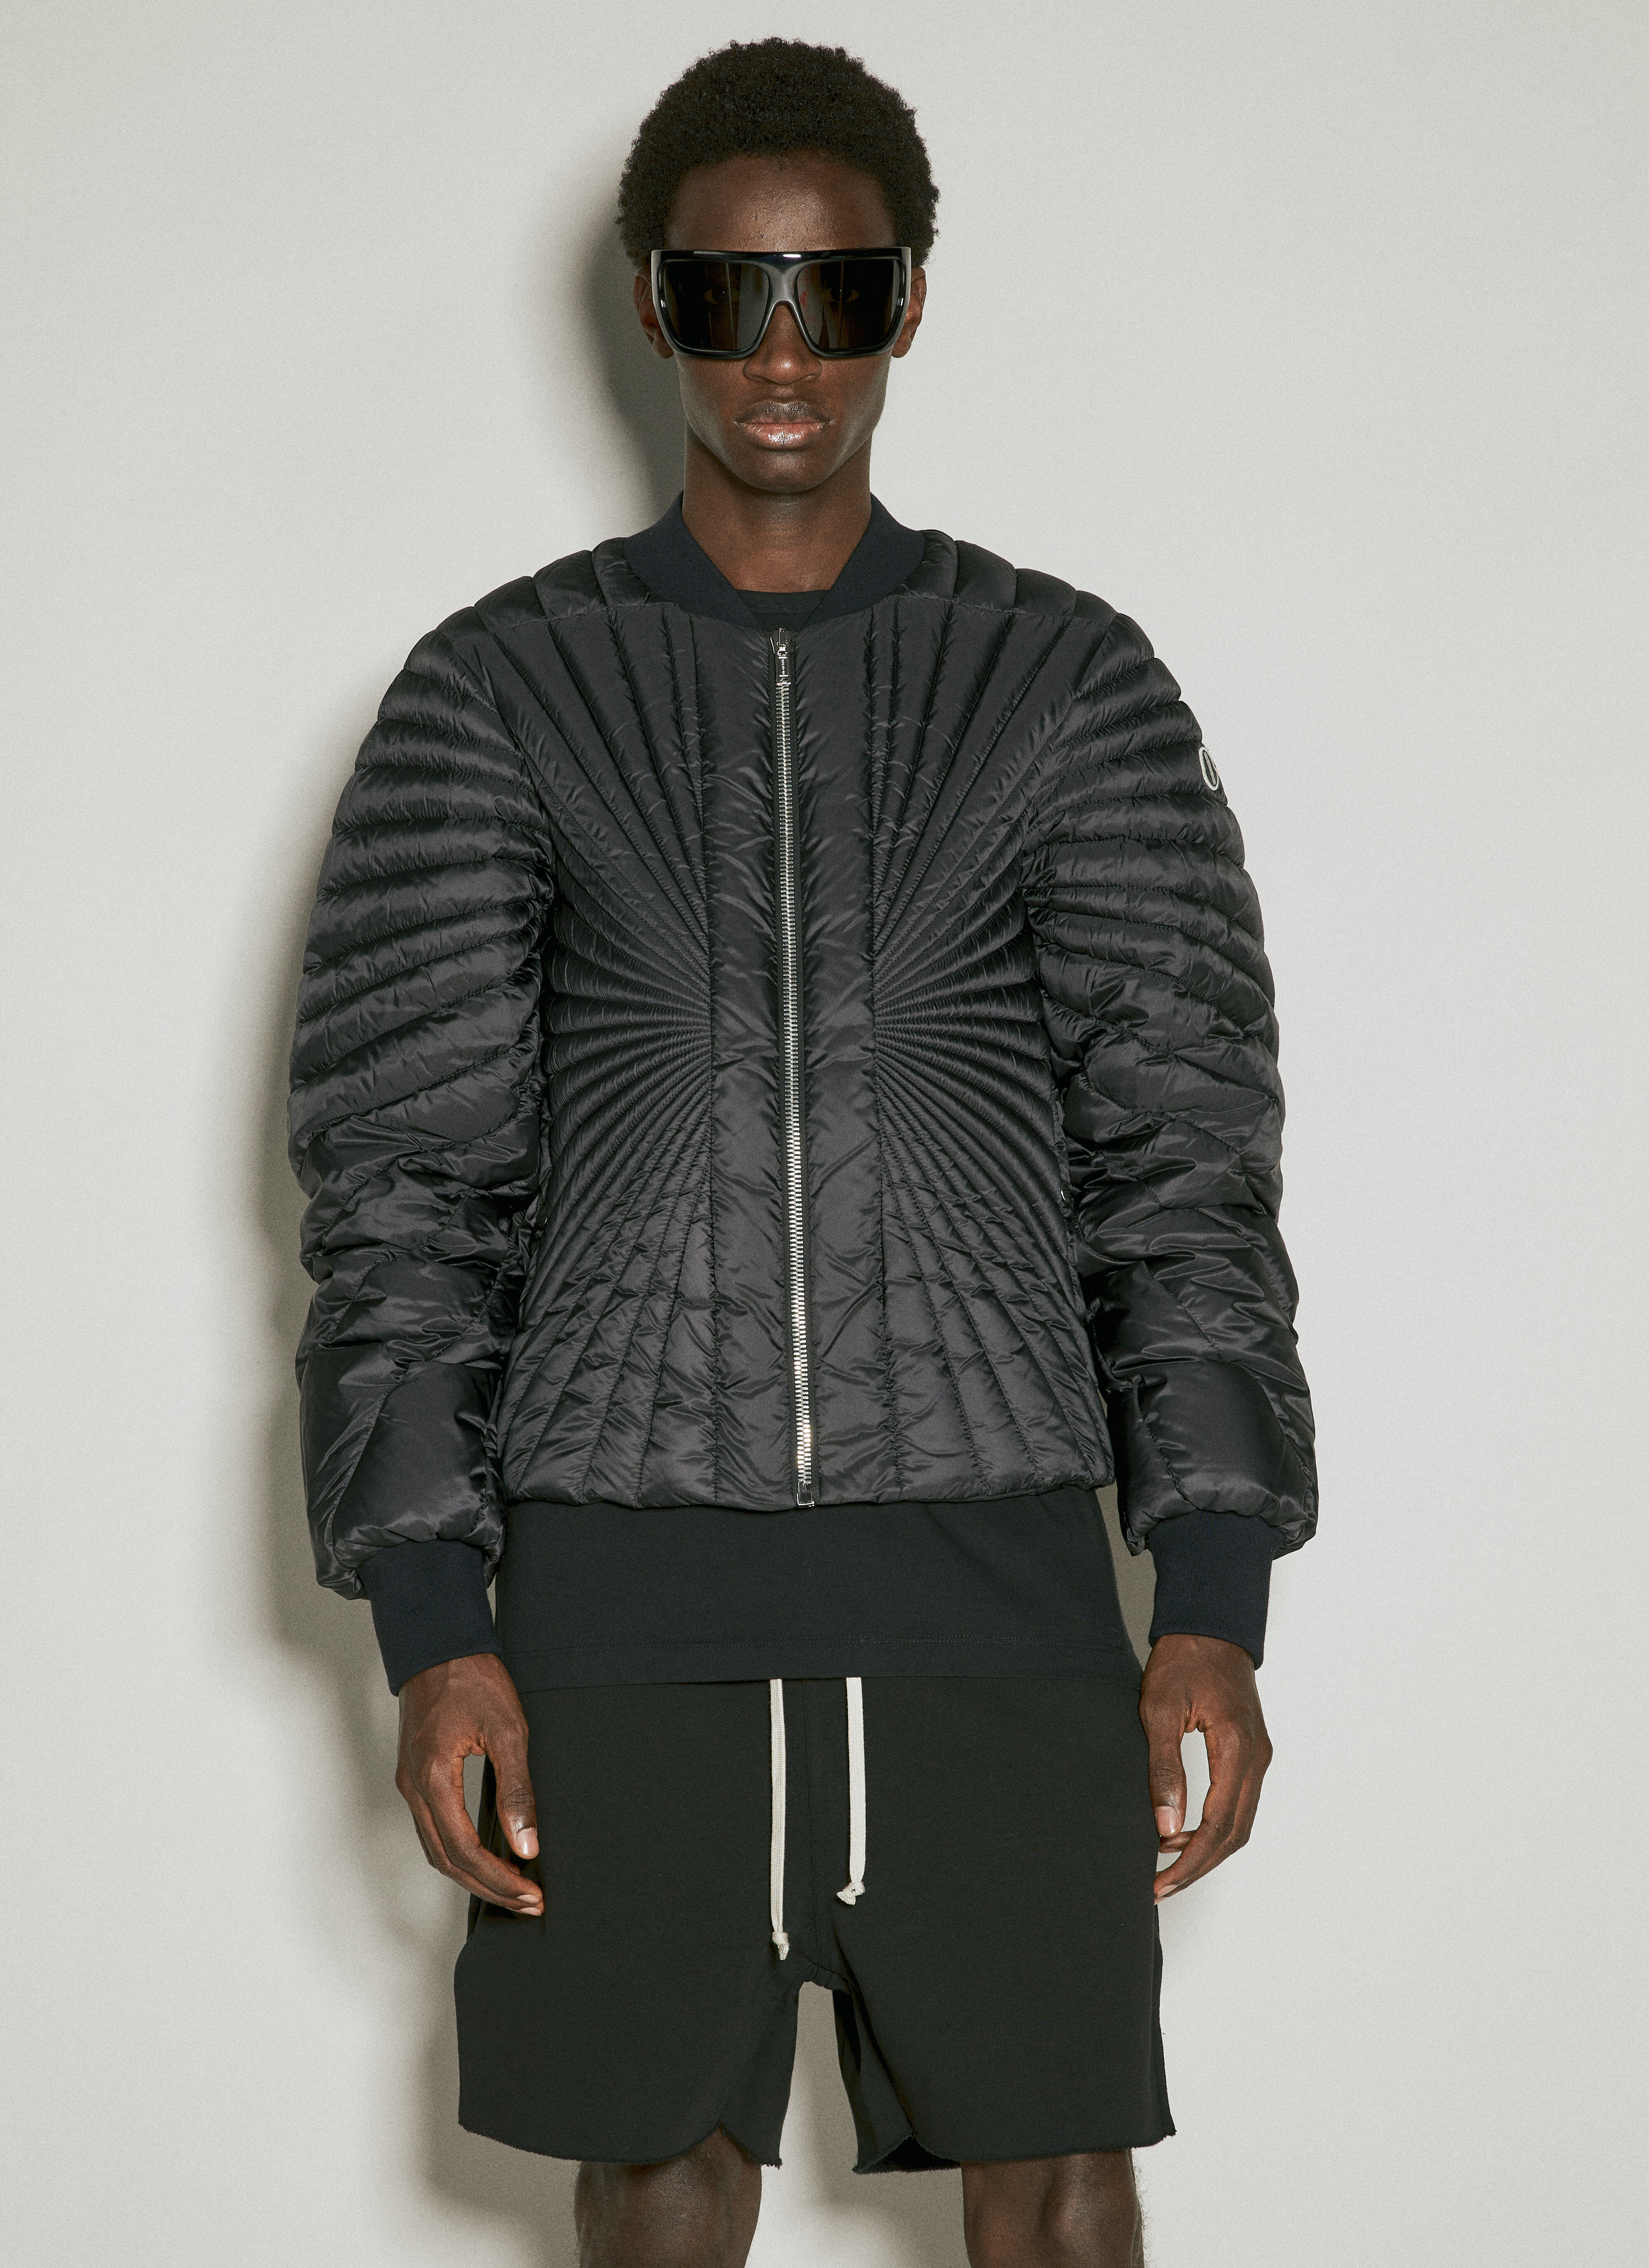 Moncler x Roc Nation designed by Jay-Z 래디언스 다운 플라이트 재킷 블랙 mrn0156002